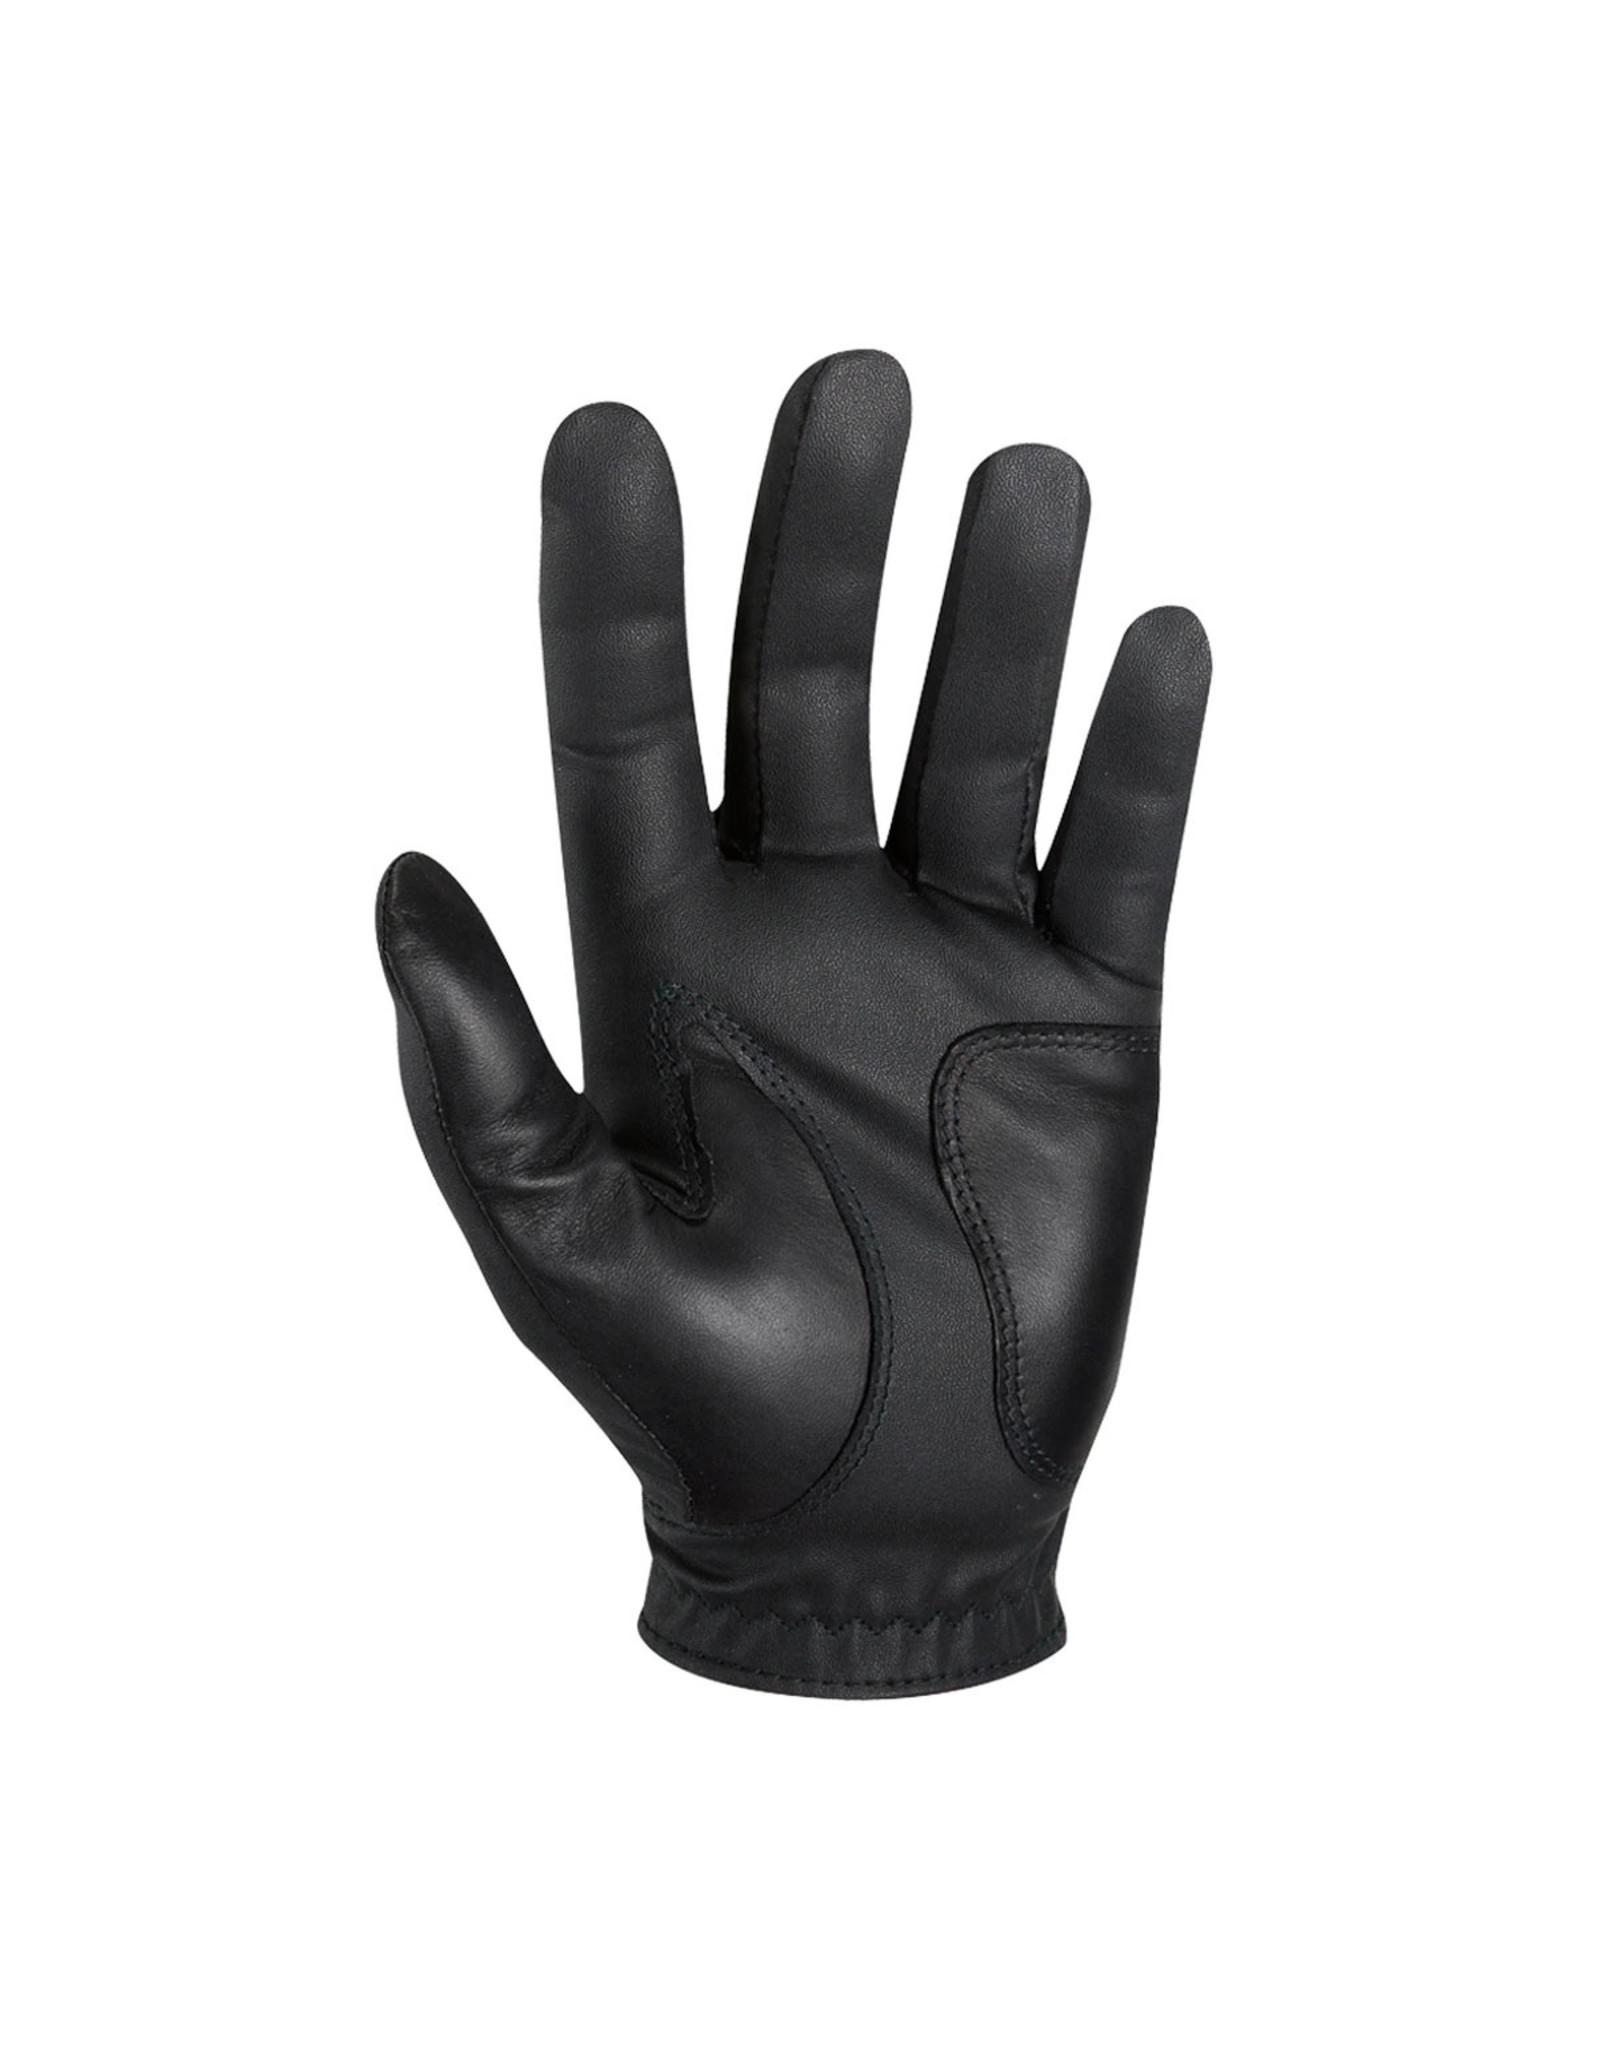 FootJoy FootJoy Men's WeatherSof Glove Black